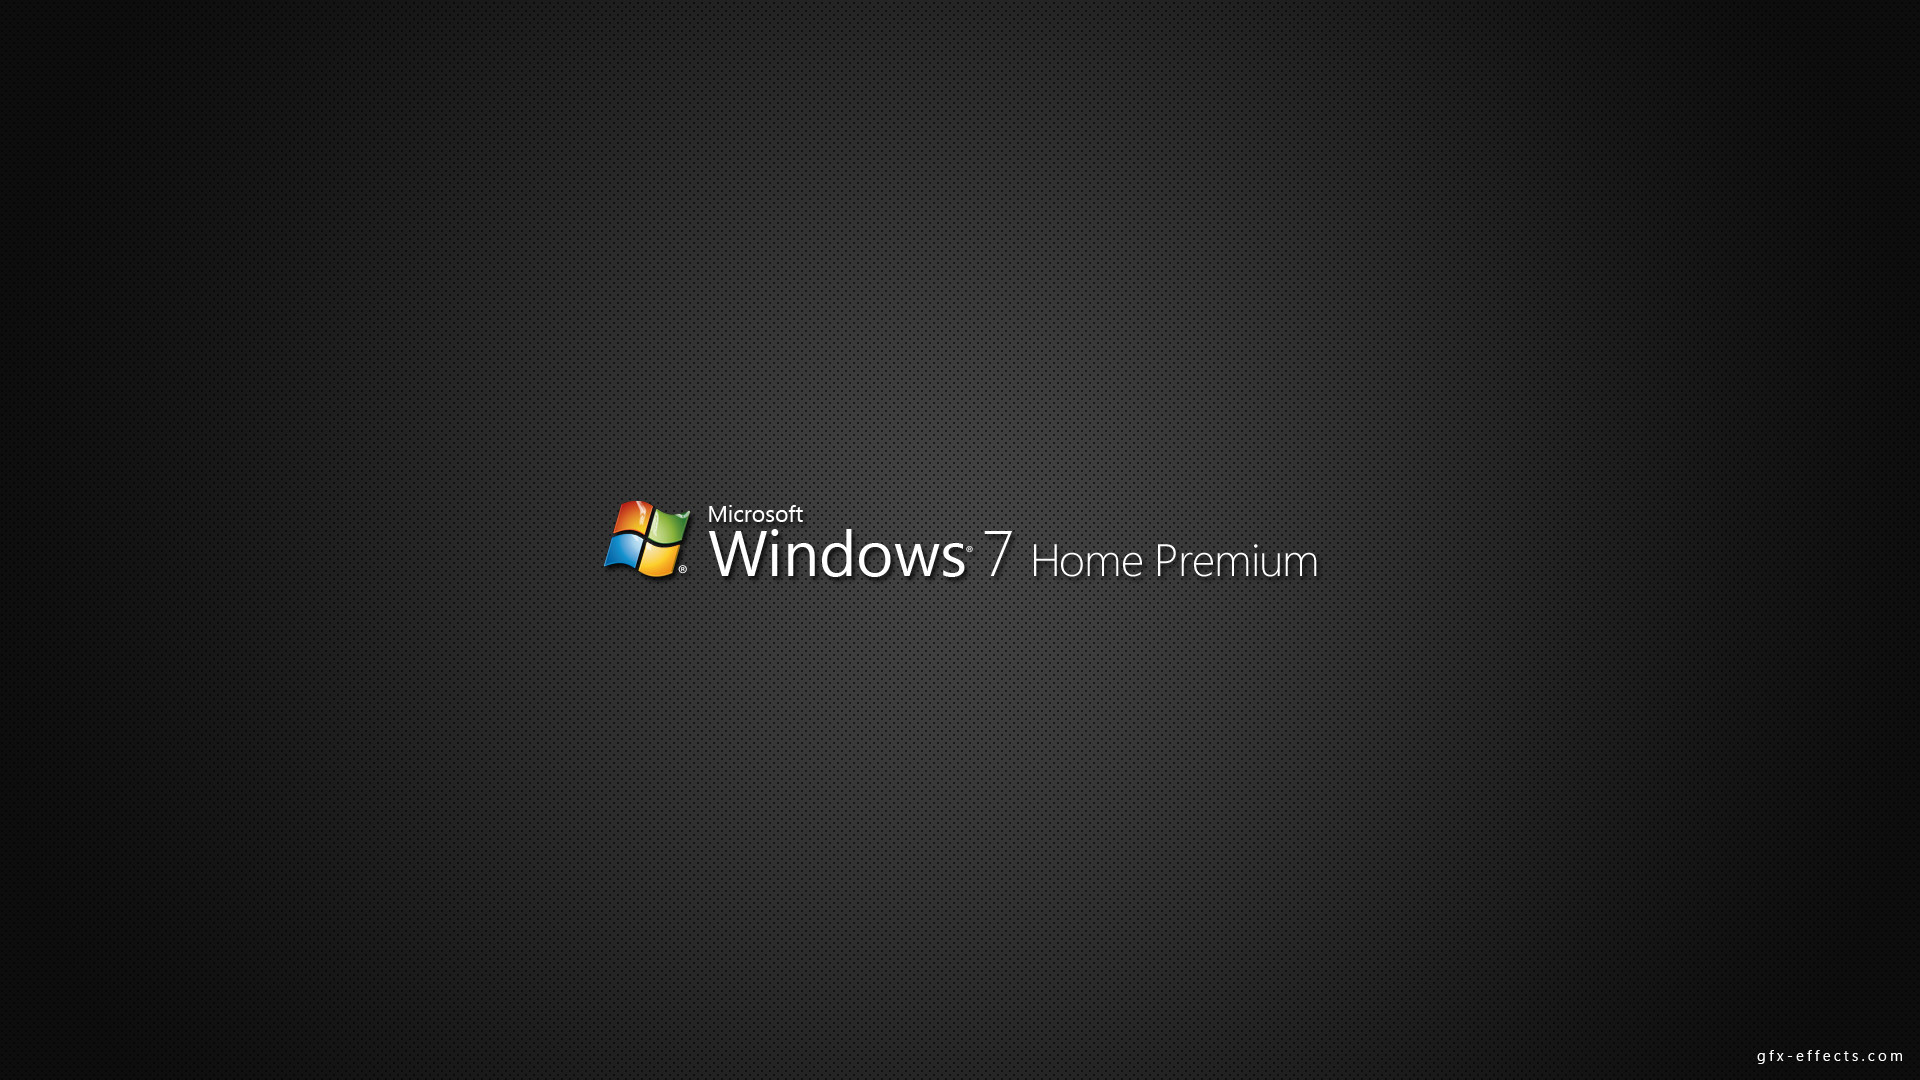 Windows 8 desktop wallpaper file path Microsoft Community